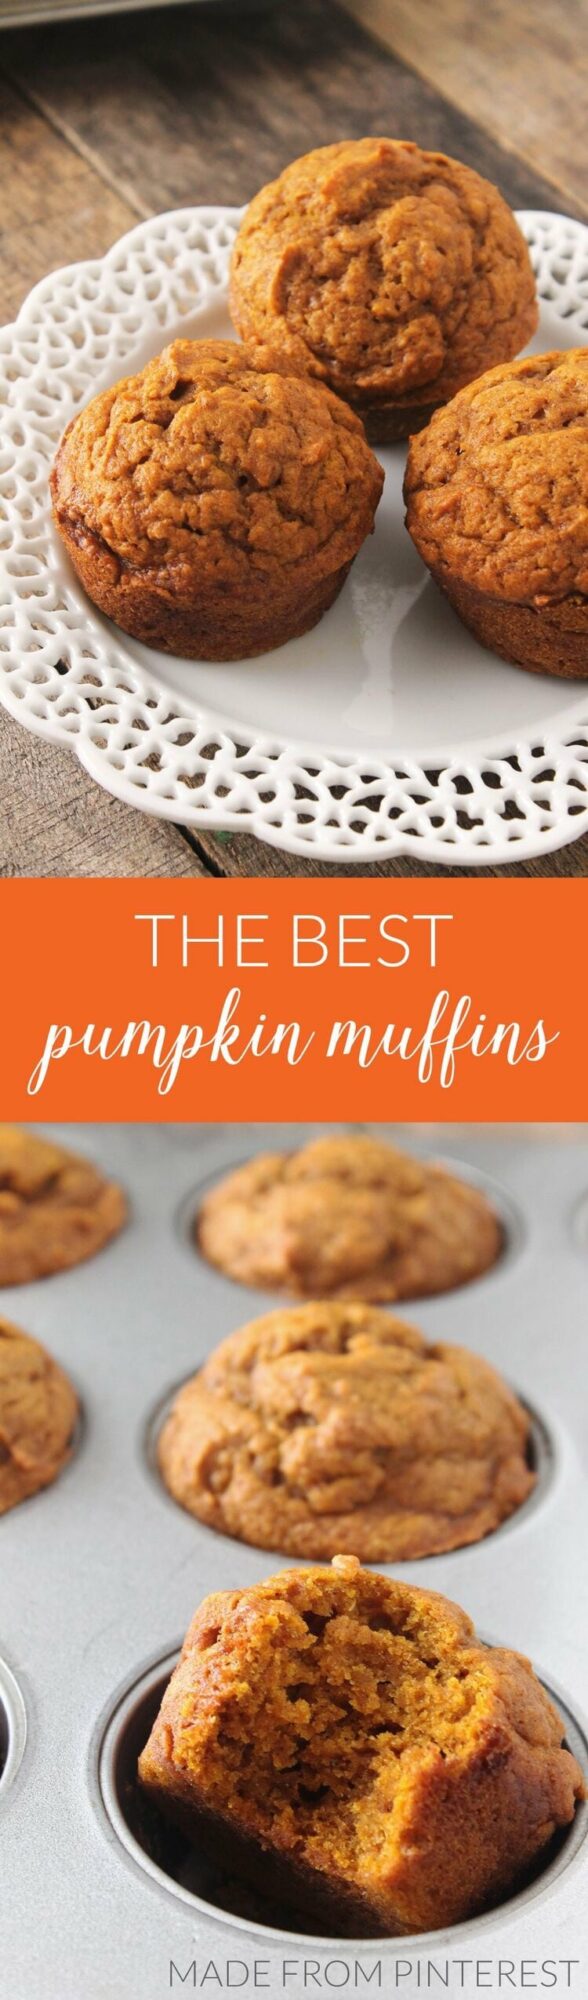 15 Pumpkin Spice Recipes for Fall (Part 3) - Pumpkin Spice Recipes for Fall, Pumpkin Spice Recipes